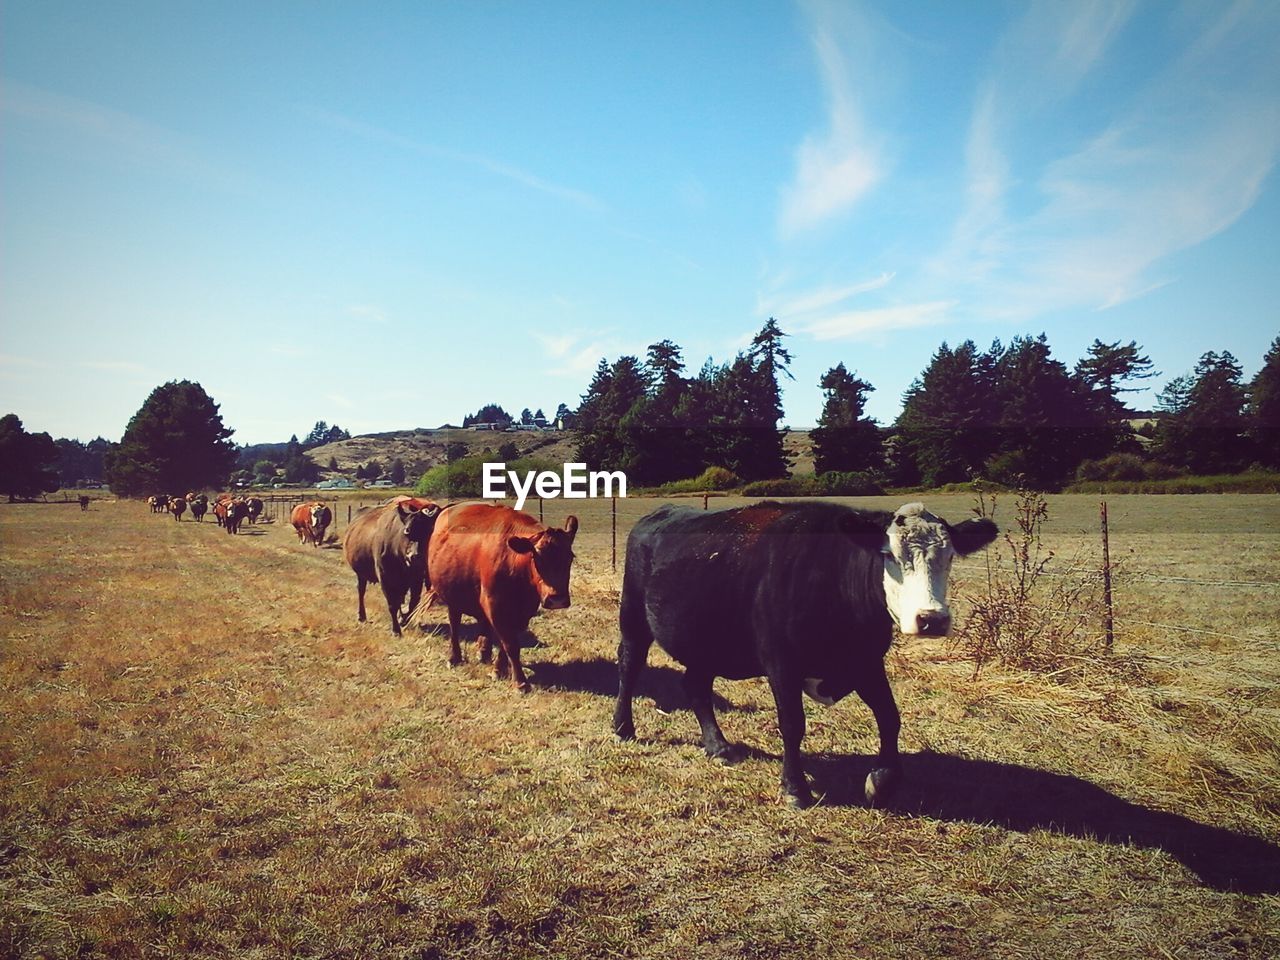 Cows walking on field in ranch against sky